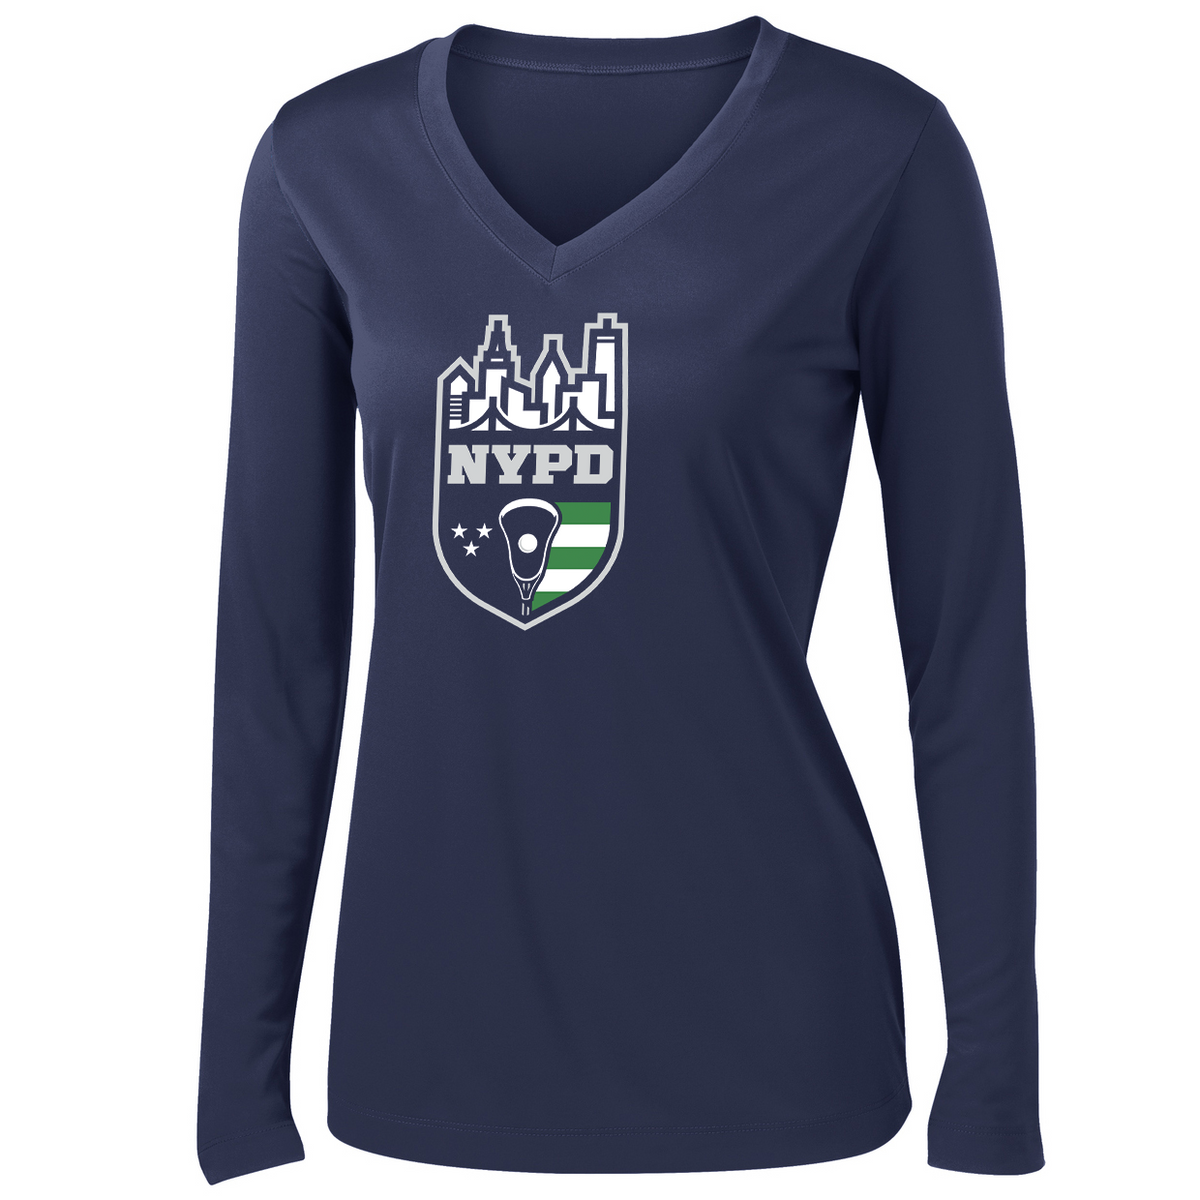 NYPD Womens Lacrosse Women's Long Sleeve Performance Shirt